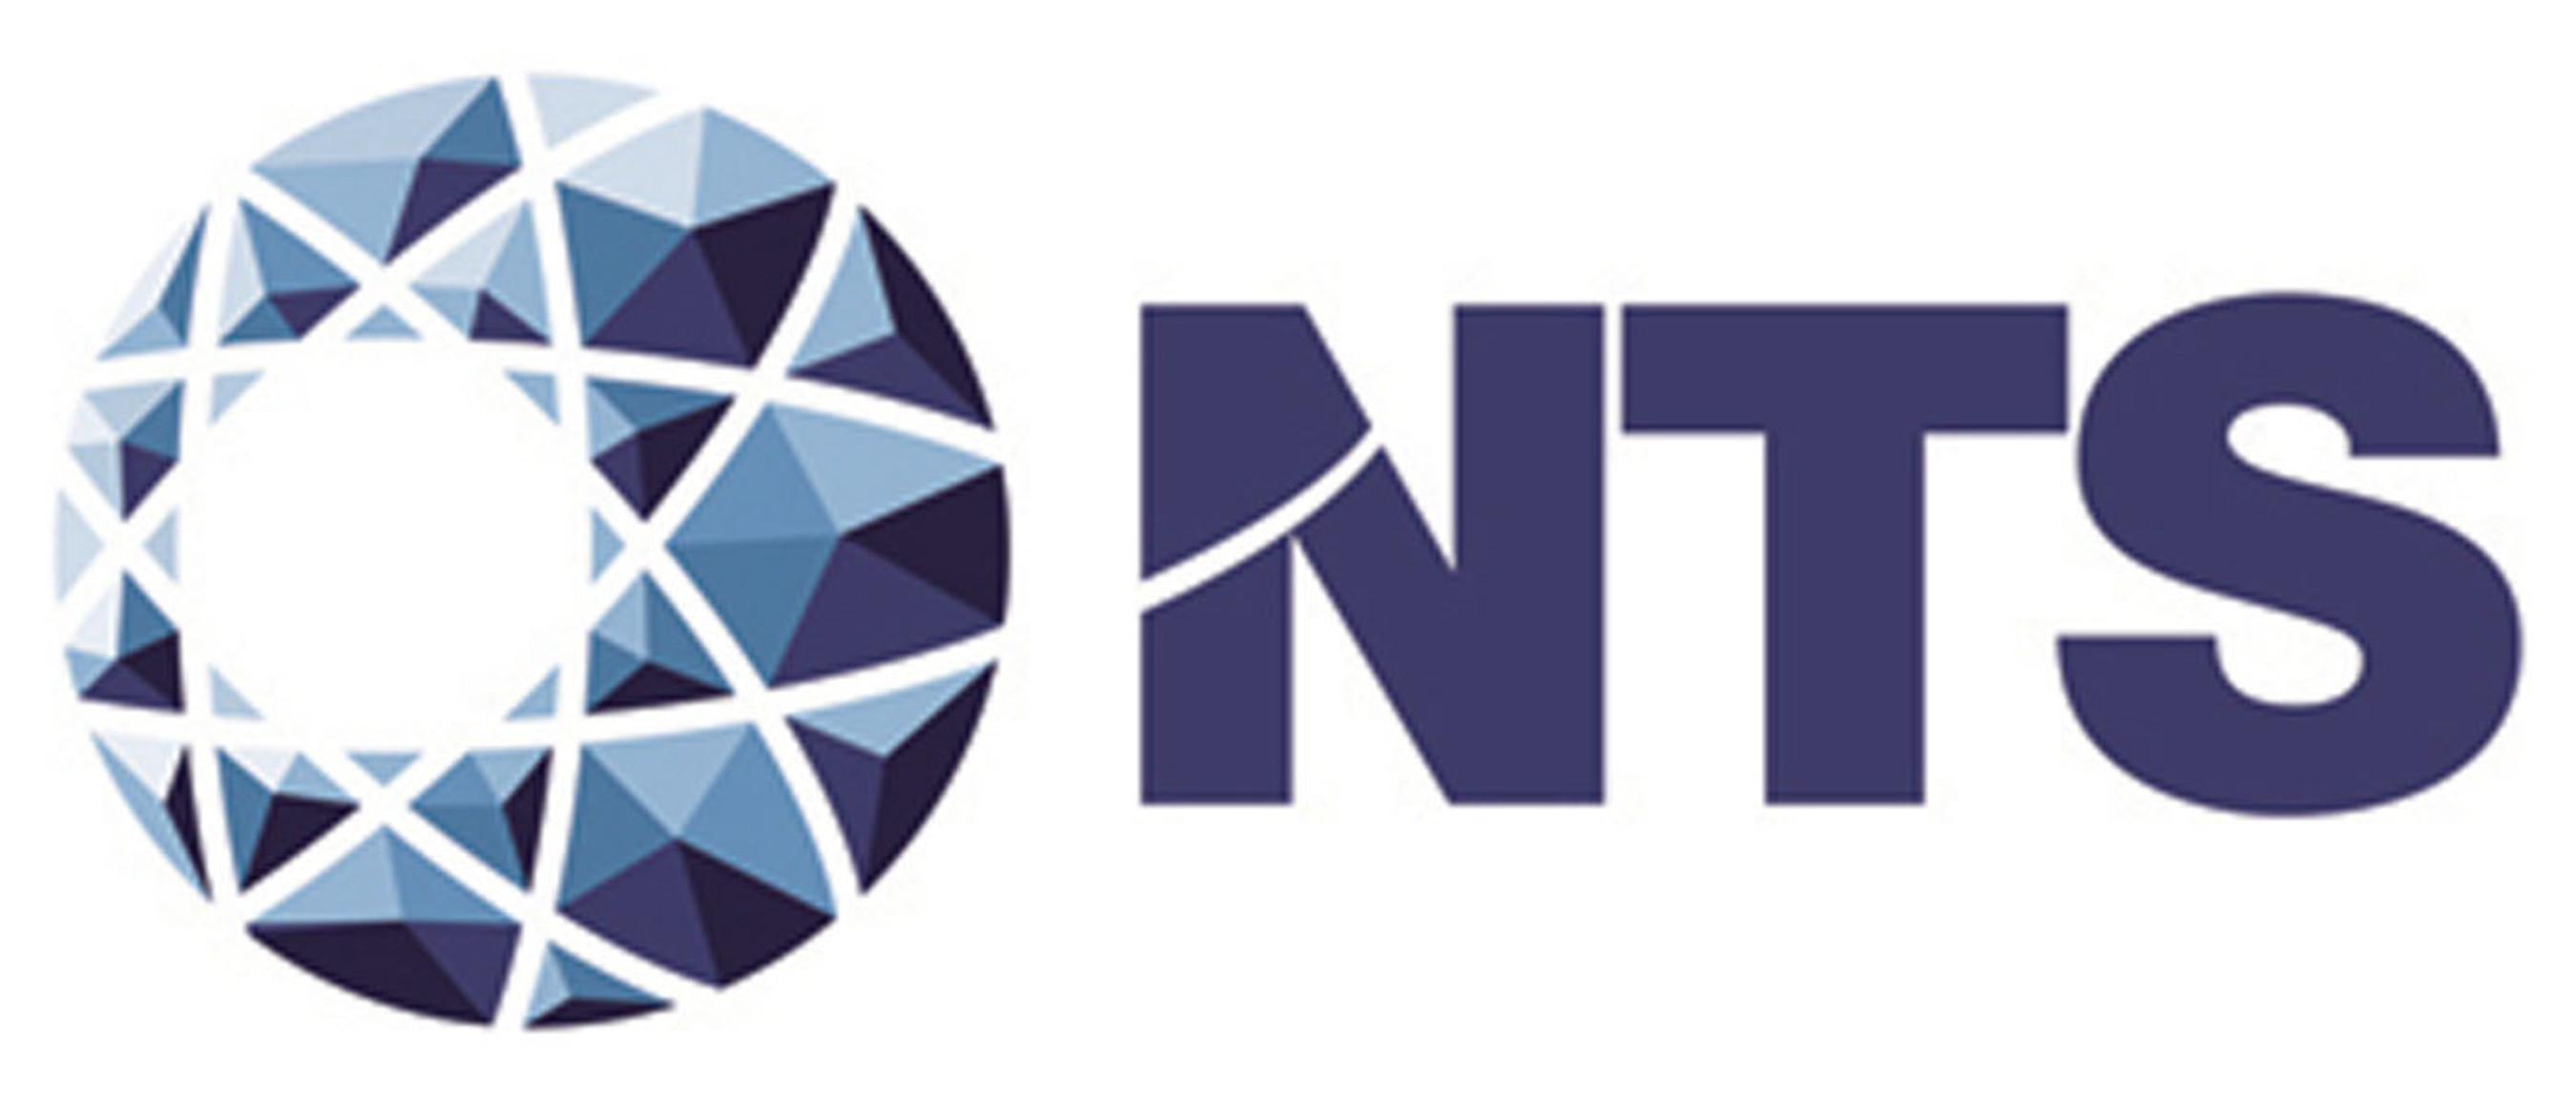 National Technical Systems, Inc. logo. (PRNewsFoto/National Technical Systems, Inc.) (PRNewsFoto/)